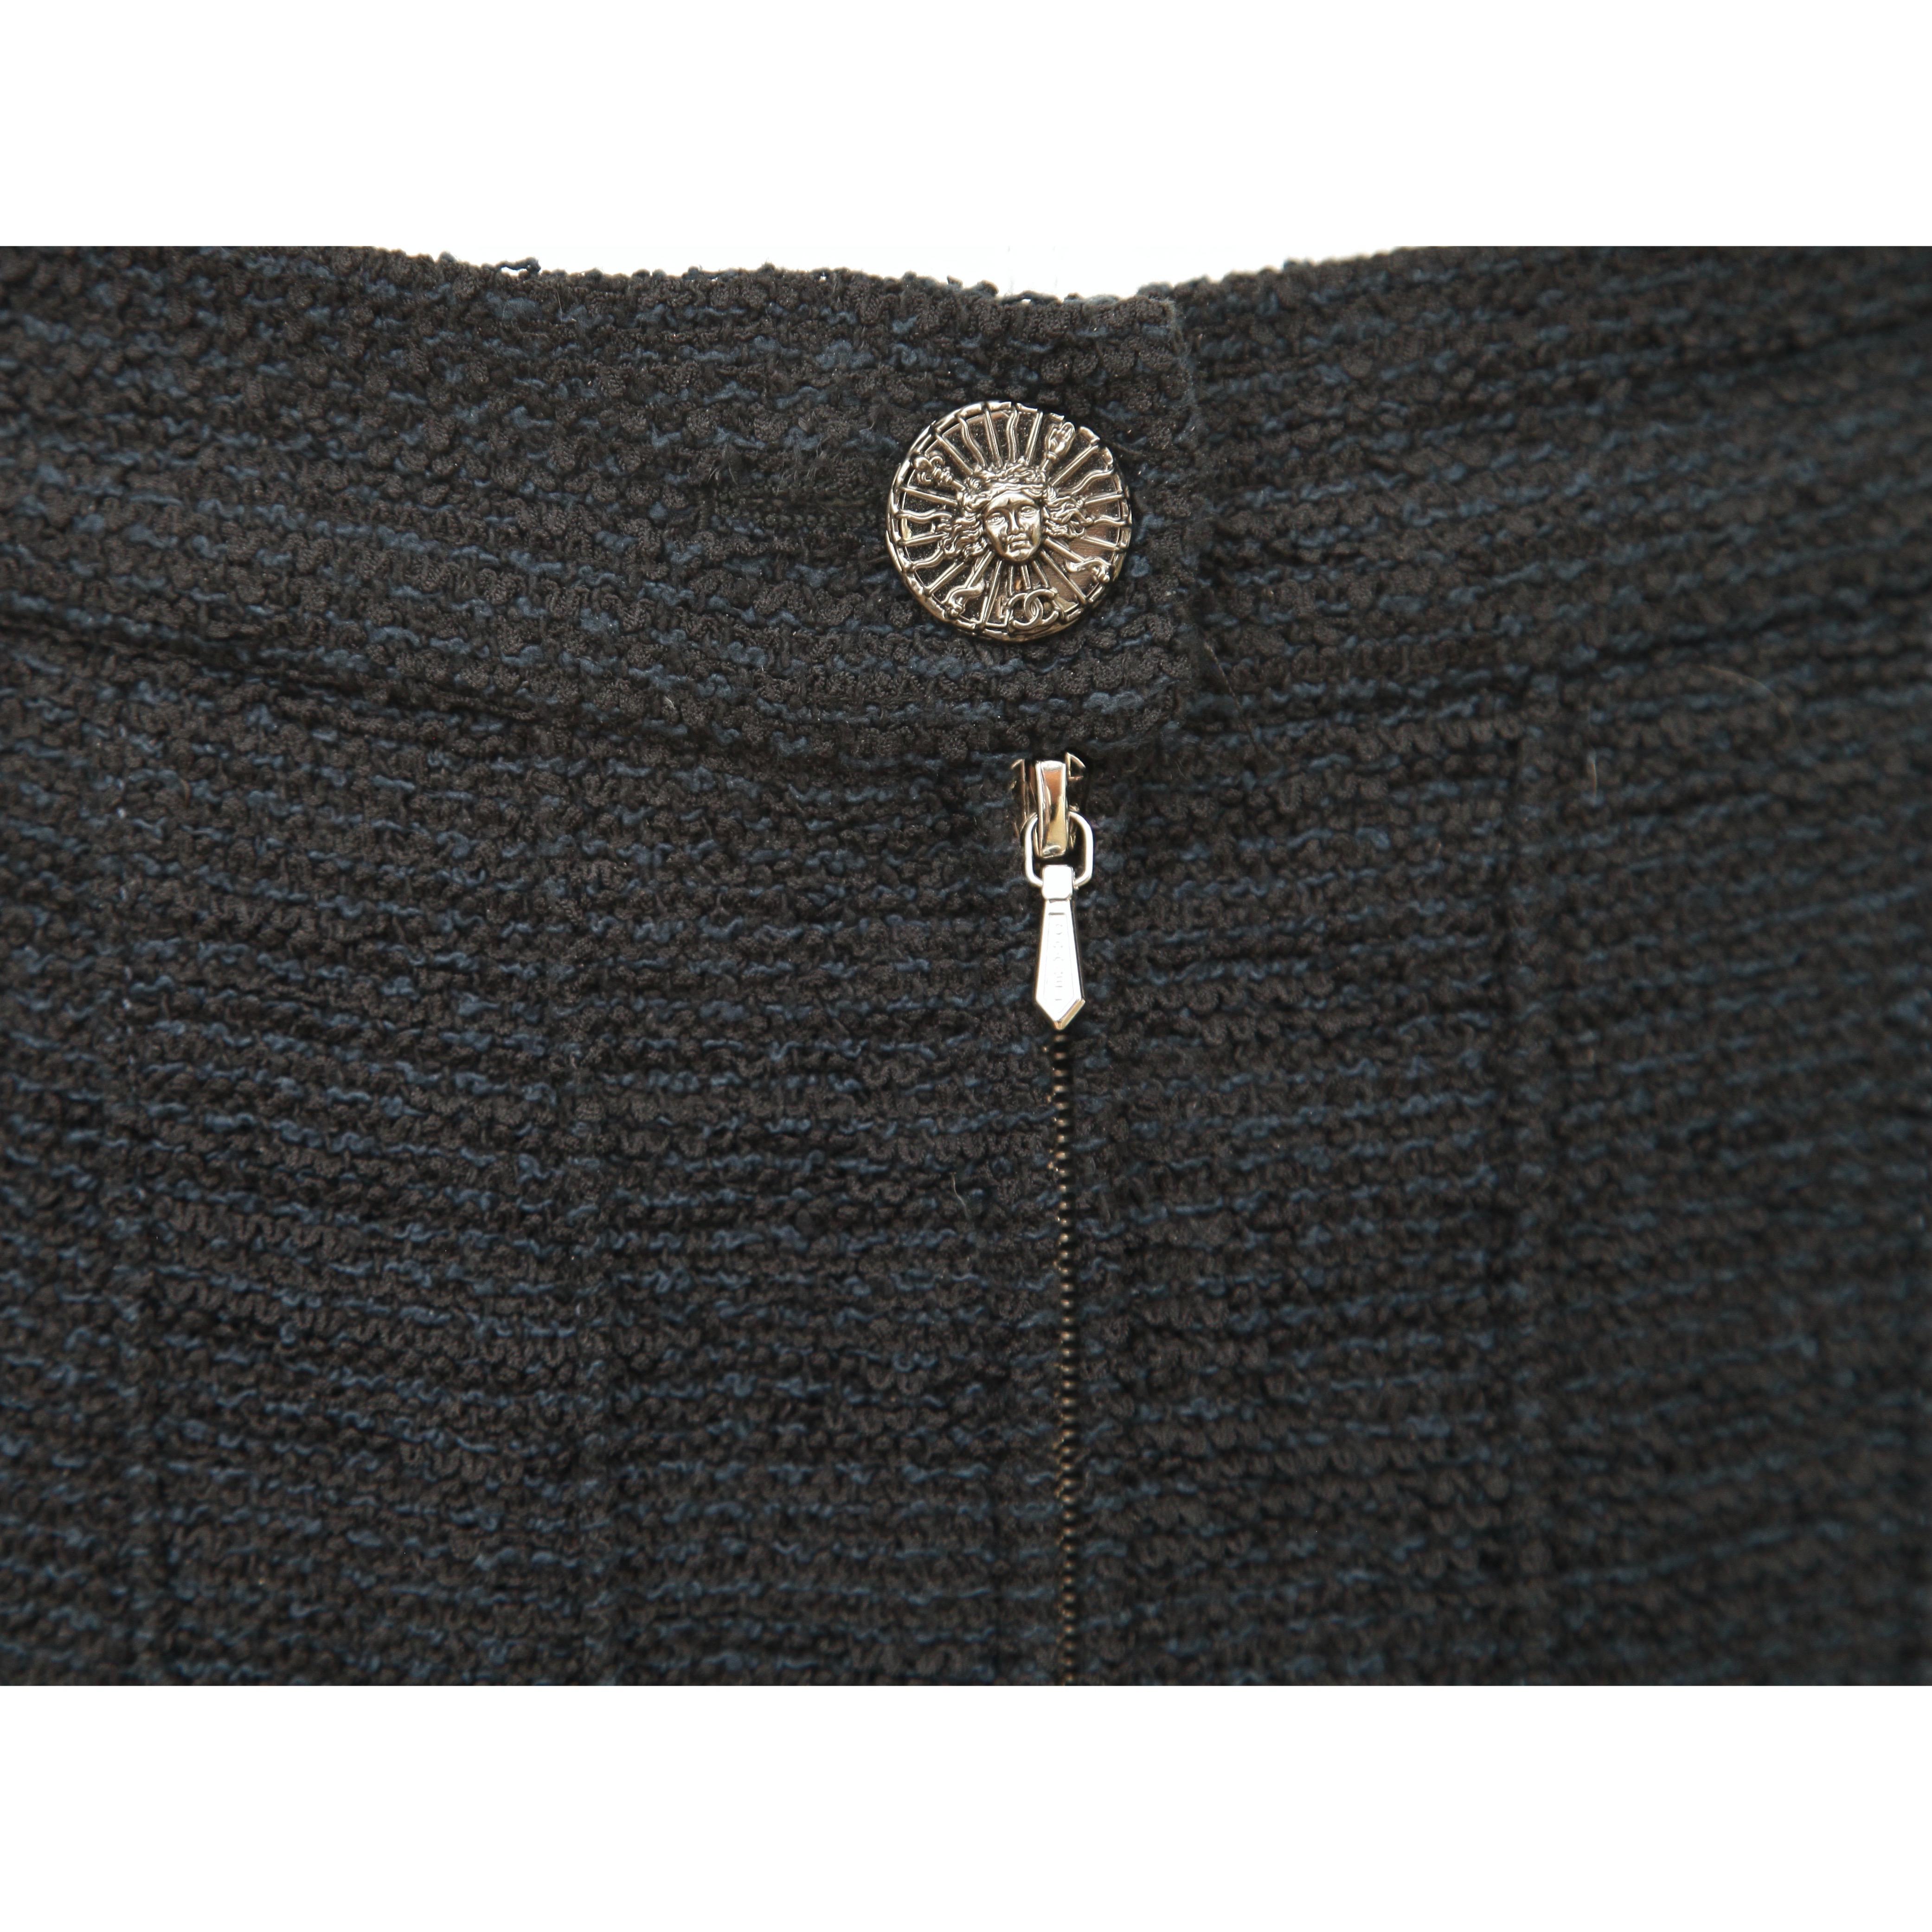 CHANEL Black Blue Tweed Skirt Cotton Zipper Button Pockets Sz 40 2013 13C 1